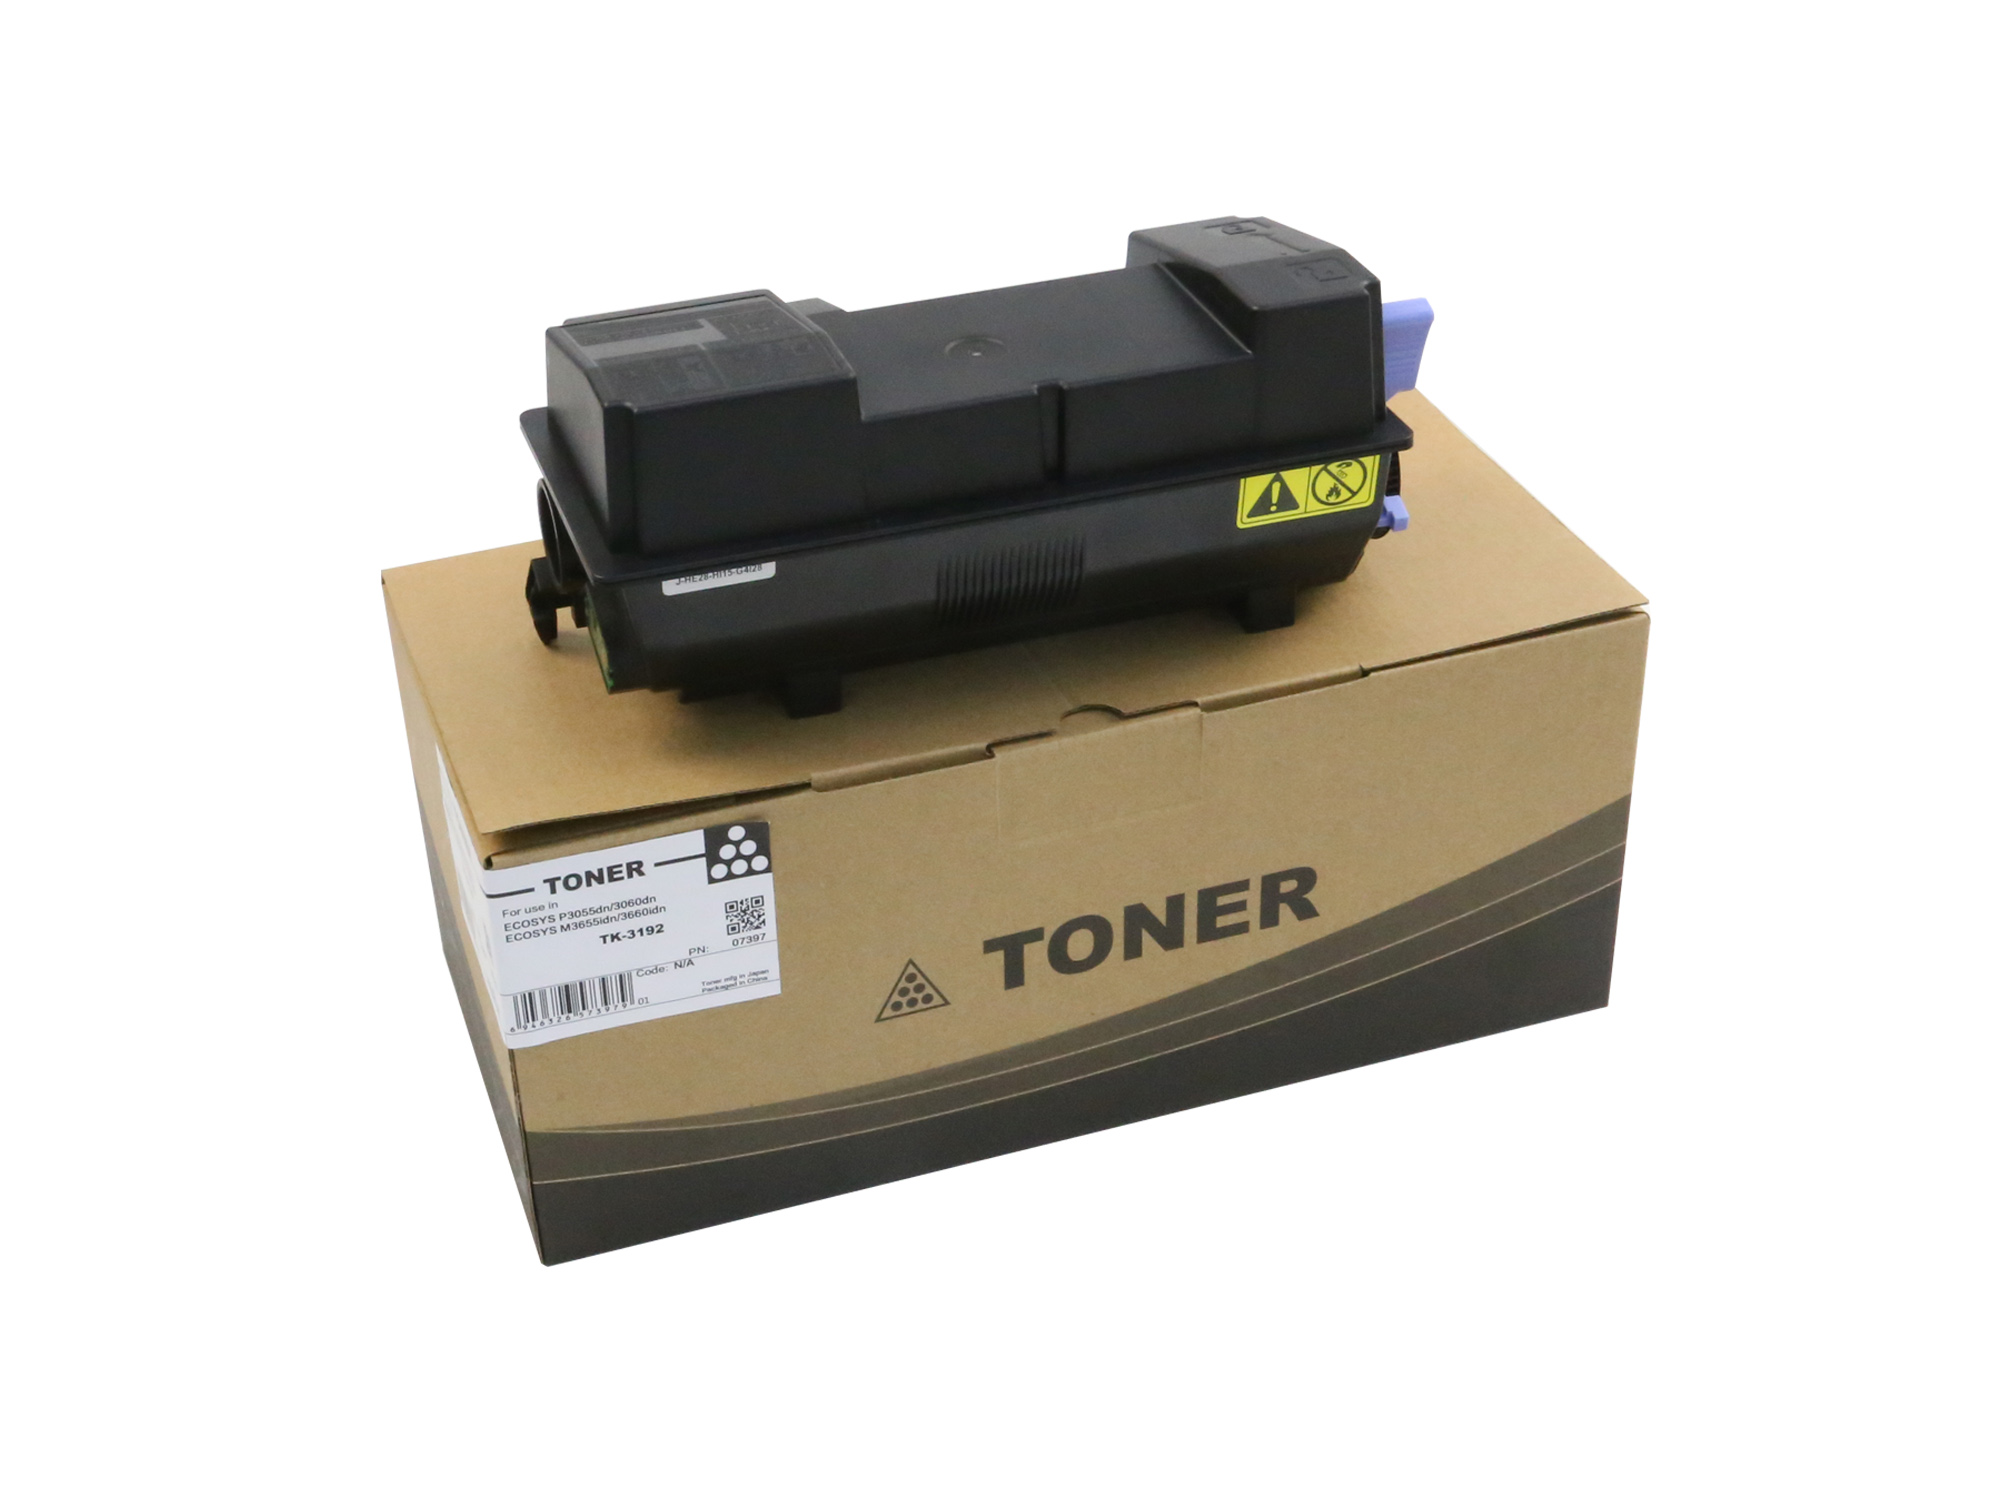 TK-3192 Toner Cartridge for Kyocera ECOSYS P3060dn